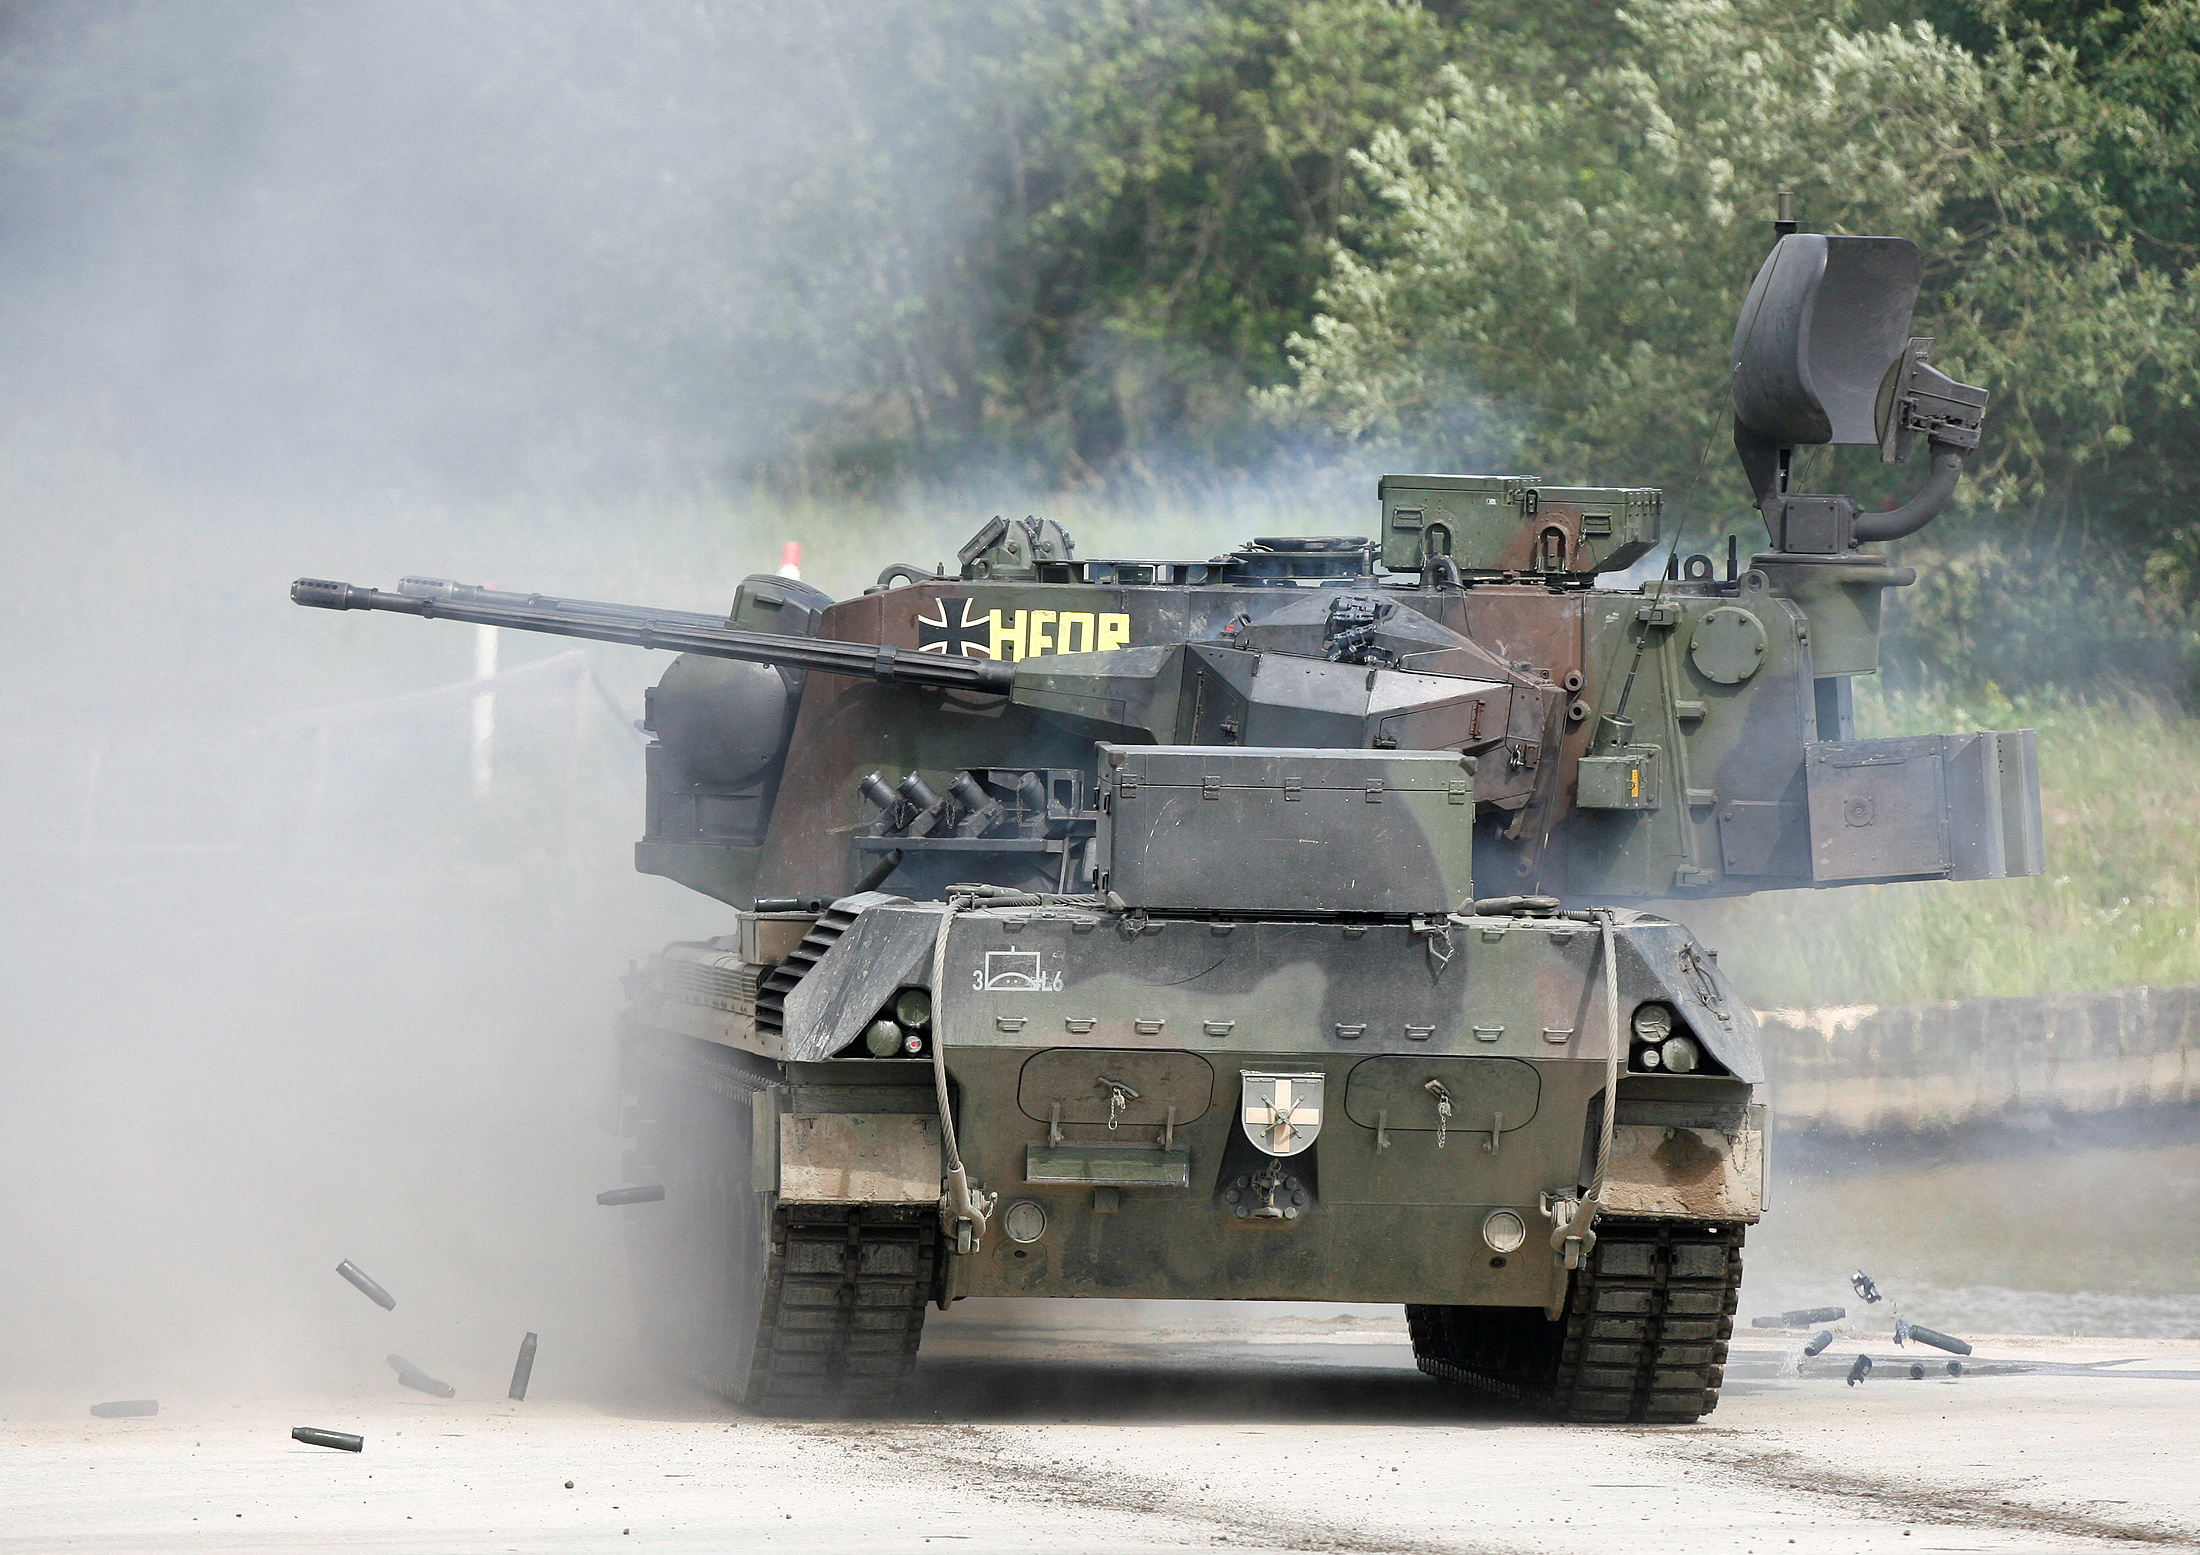 Gepard antiaircraft tank of the German armed forces Bundeswehr fires during demonstration in Munster